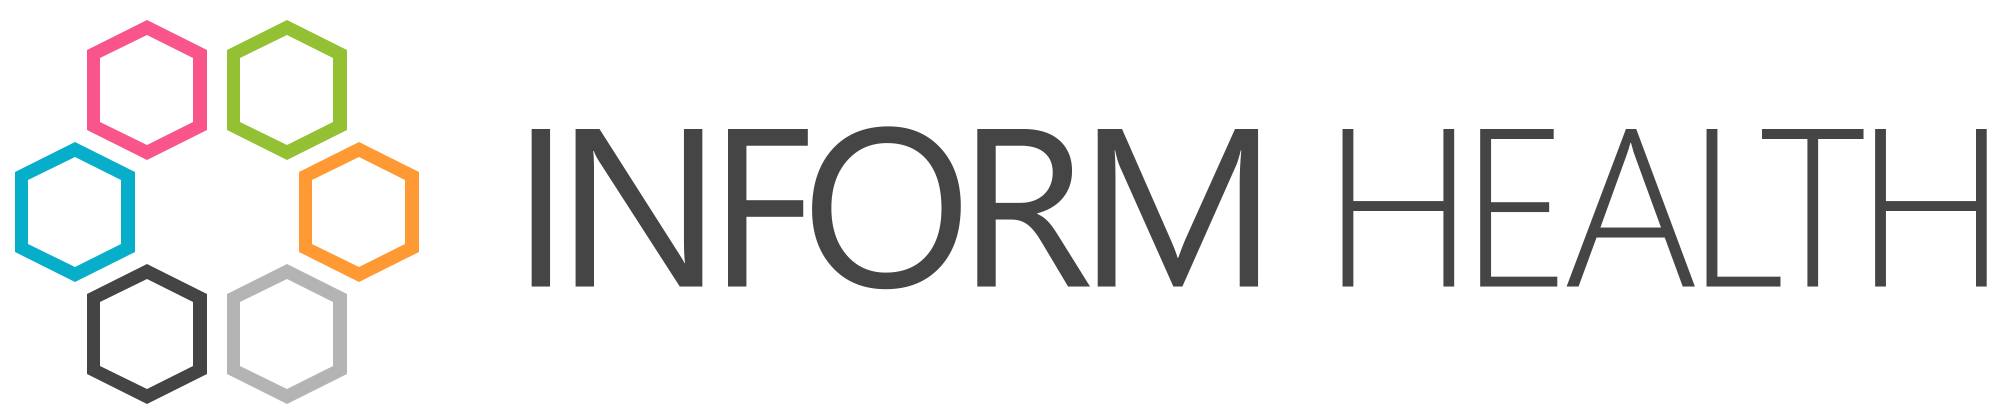 Inform Health Logo 2021 sponsor